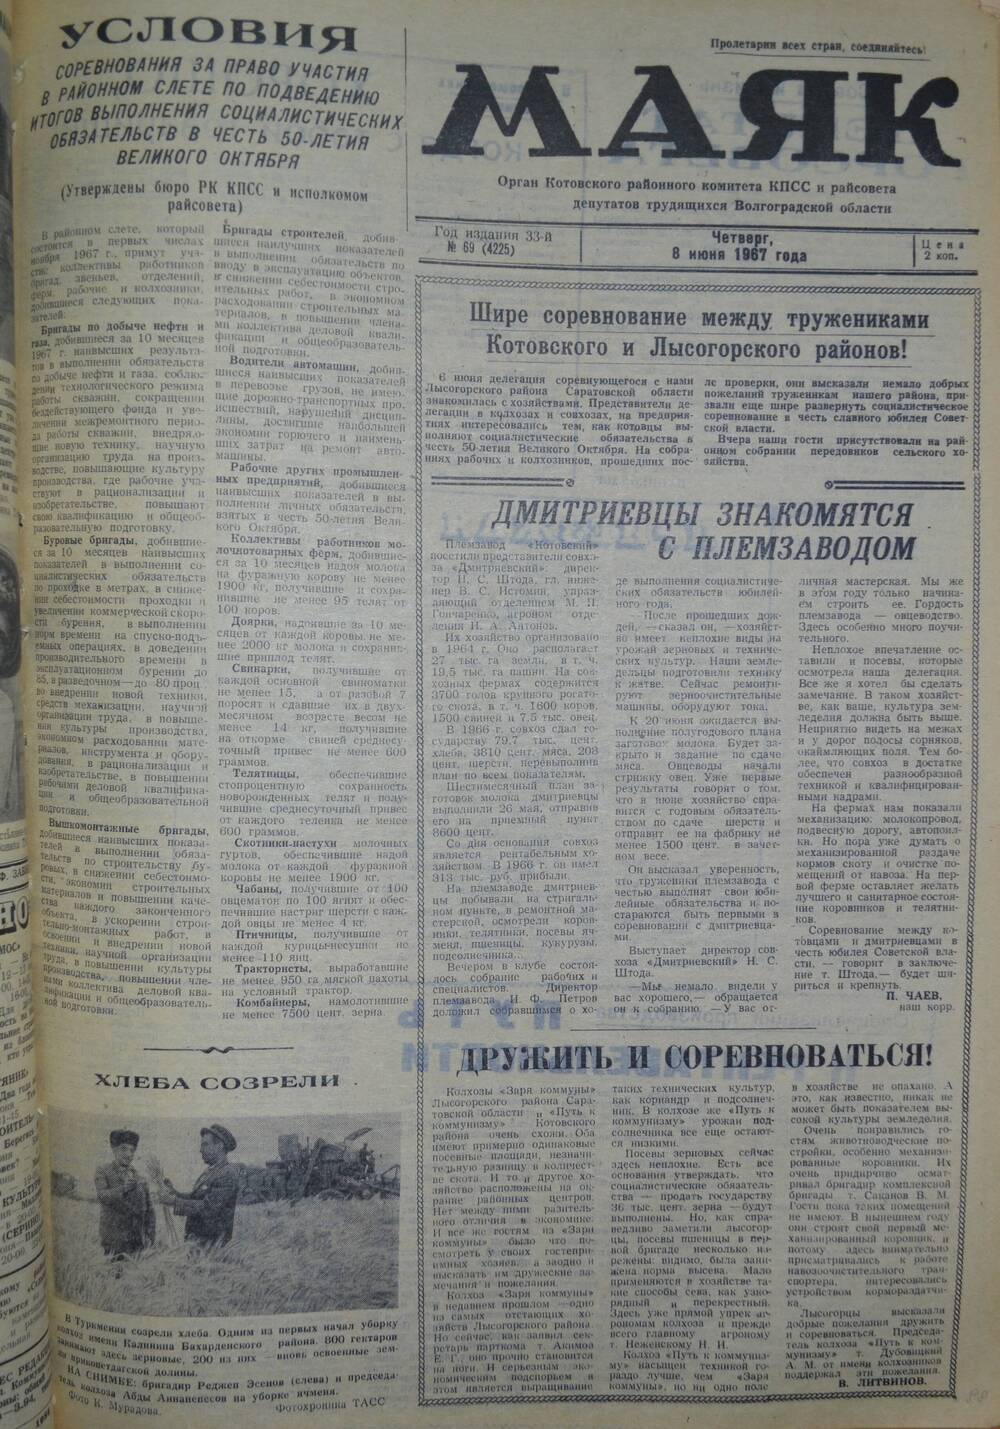 Газета Маяк № 69 (4225). Четверг, 8 июня 1967 года.